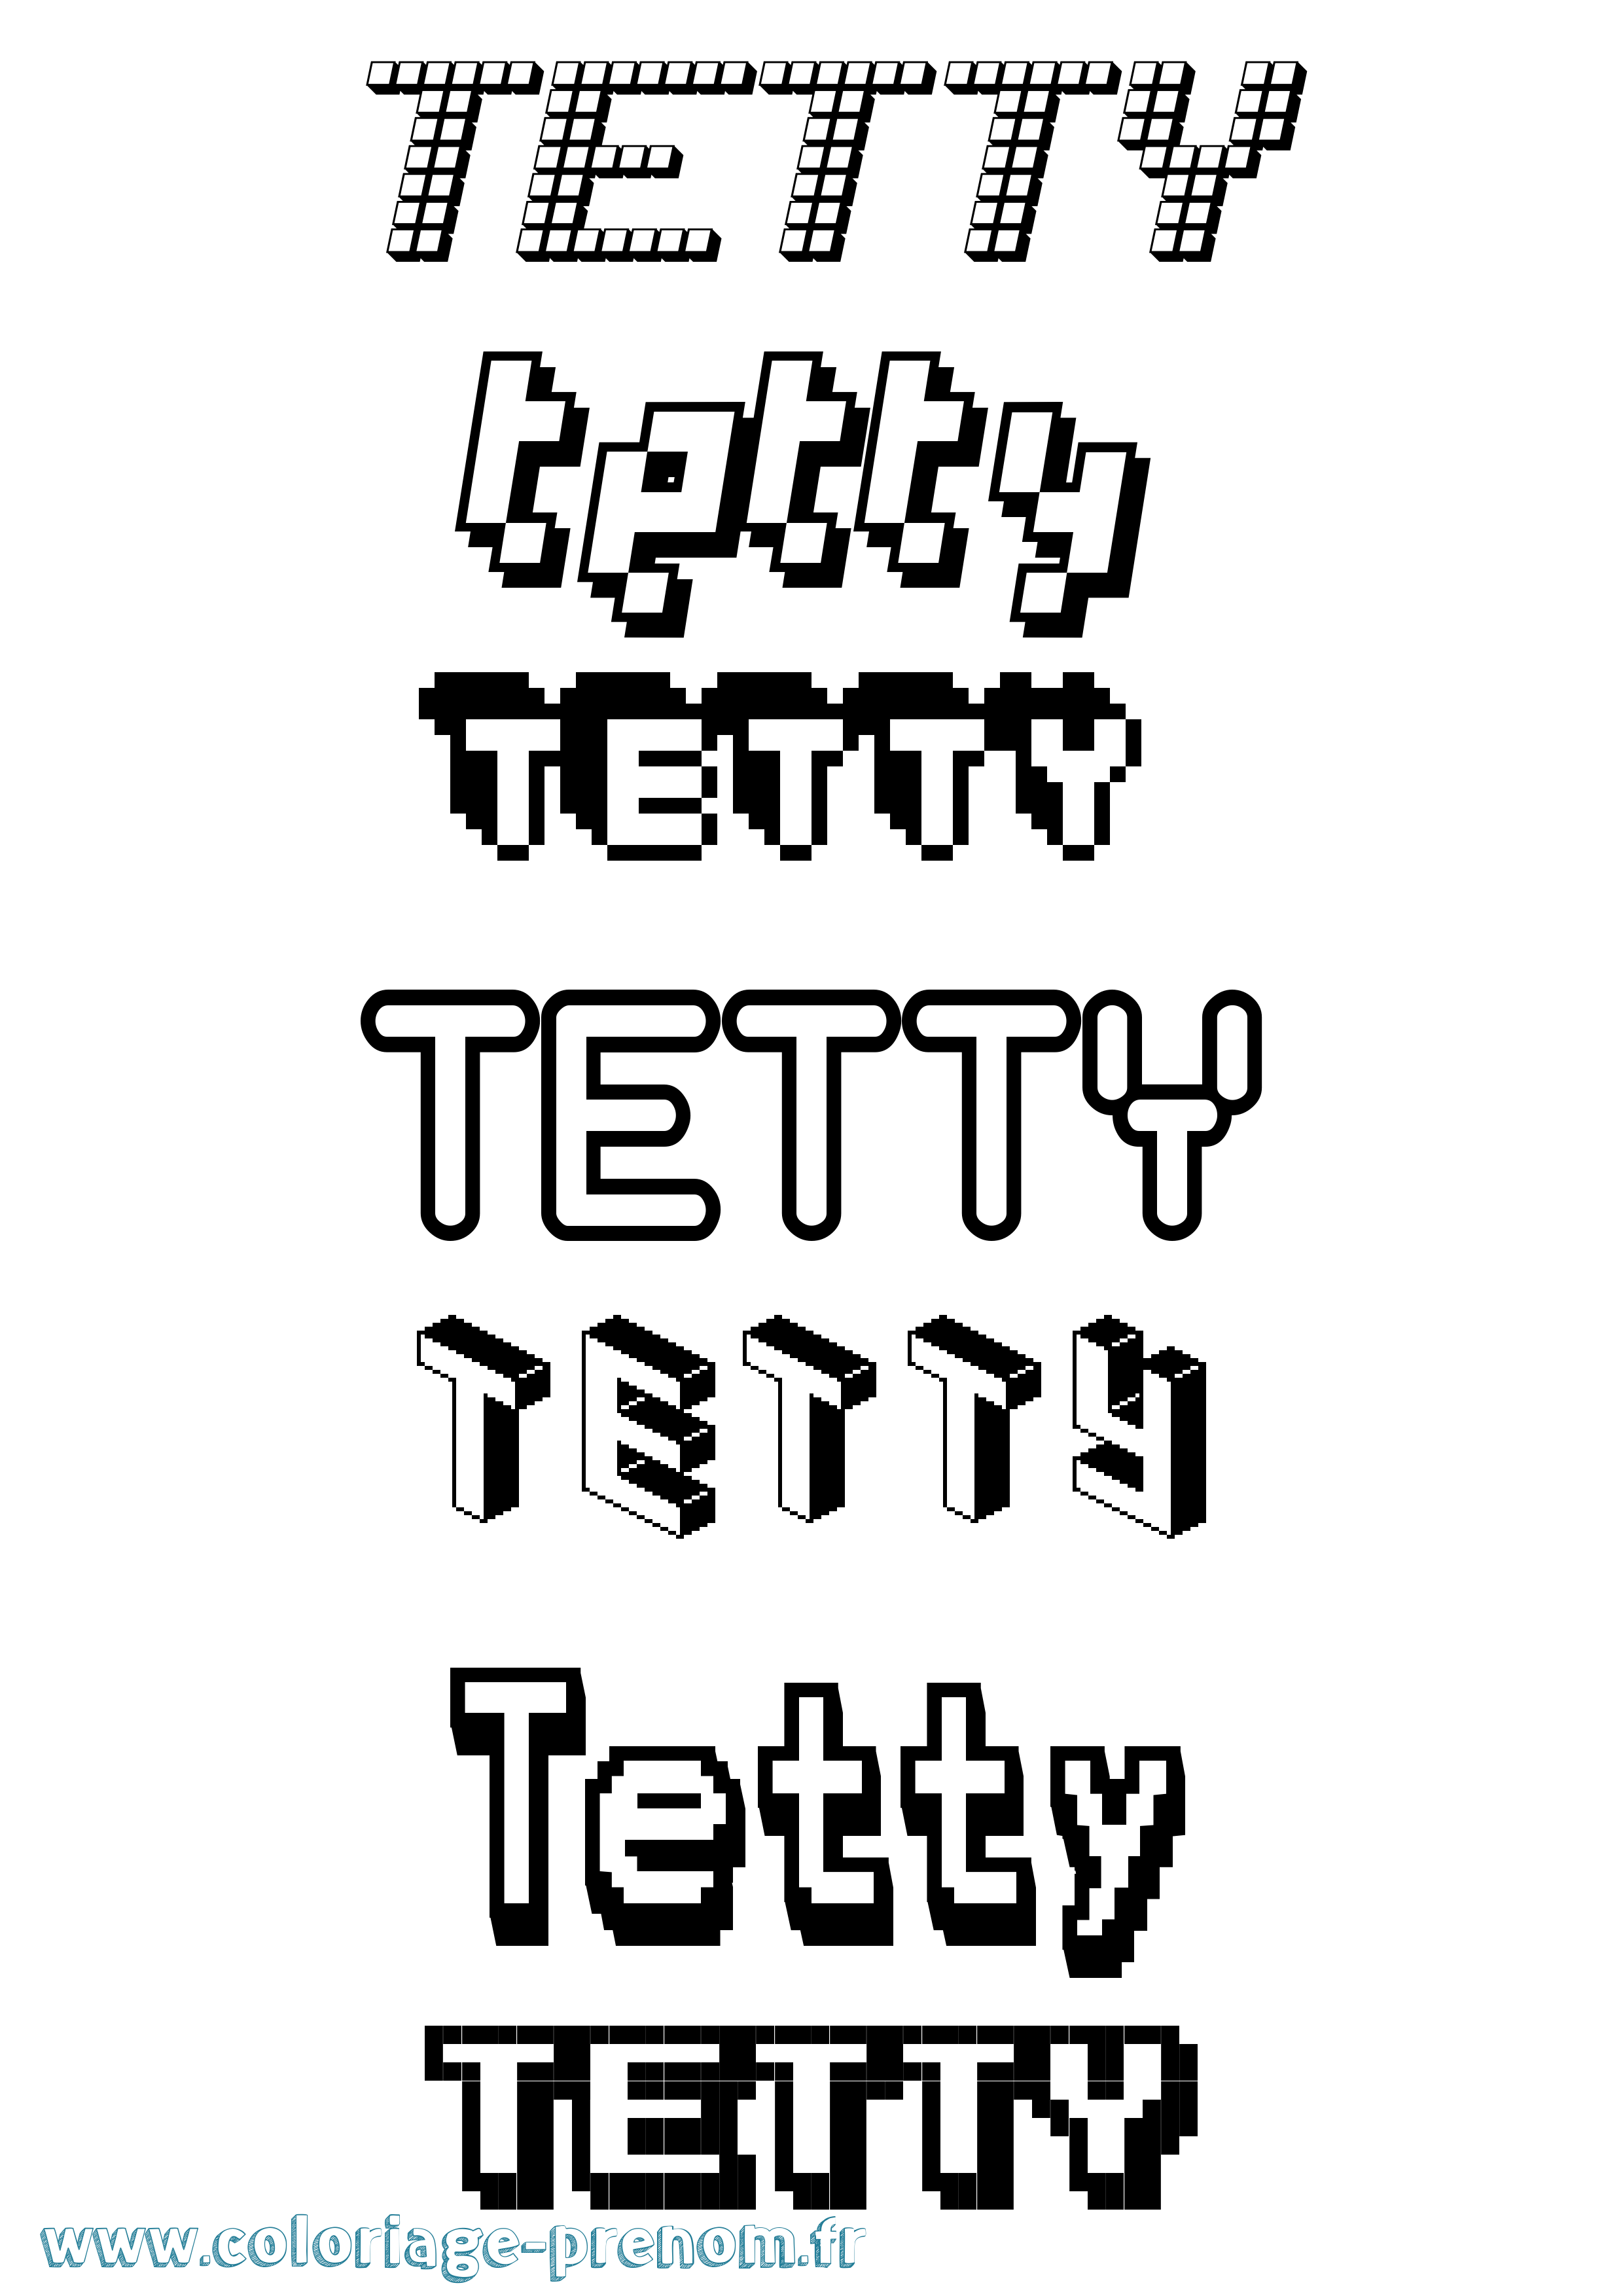 Coloriage prénom Tetty Pixel